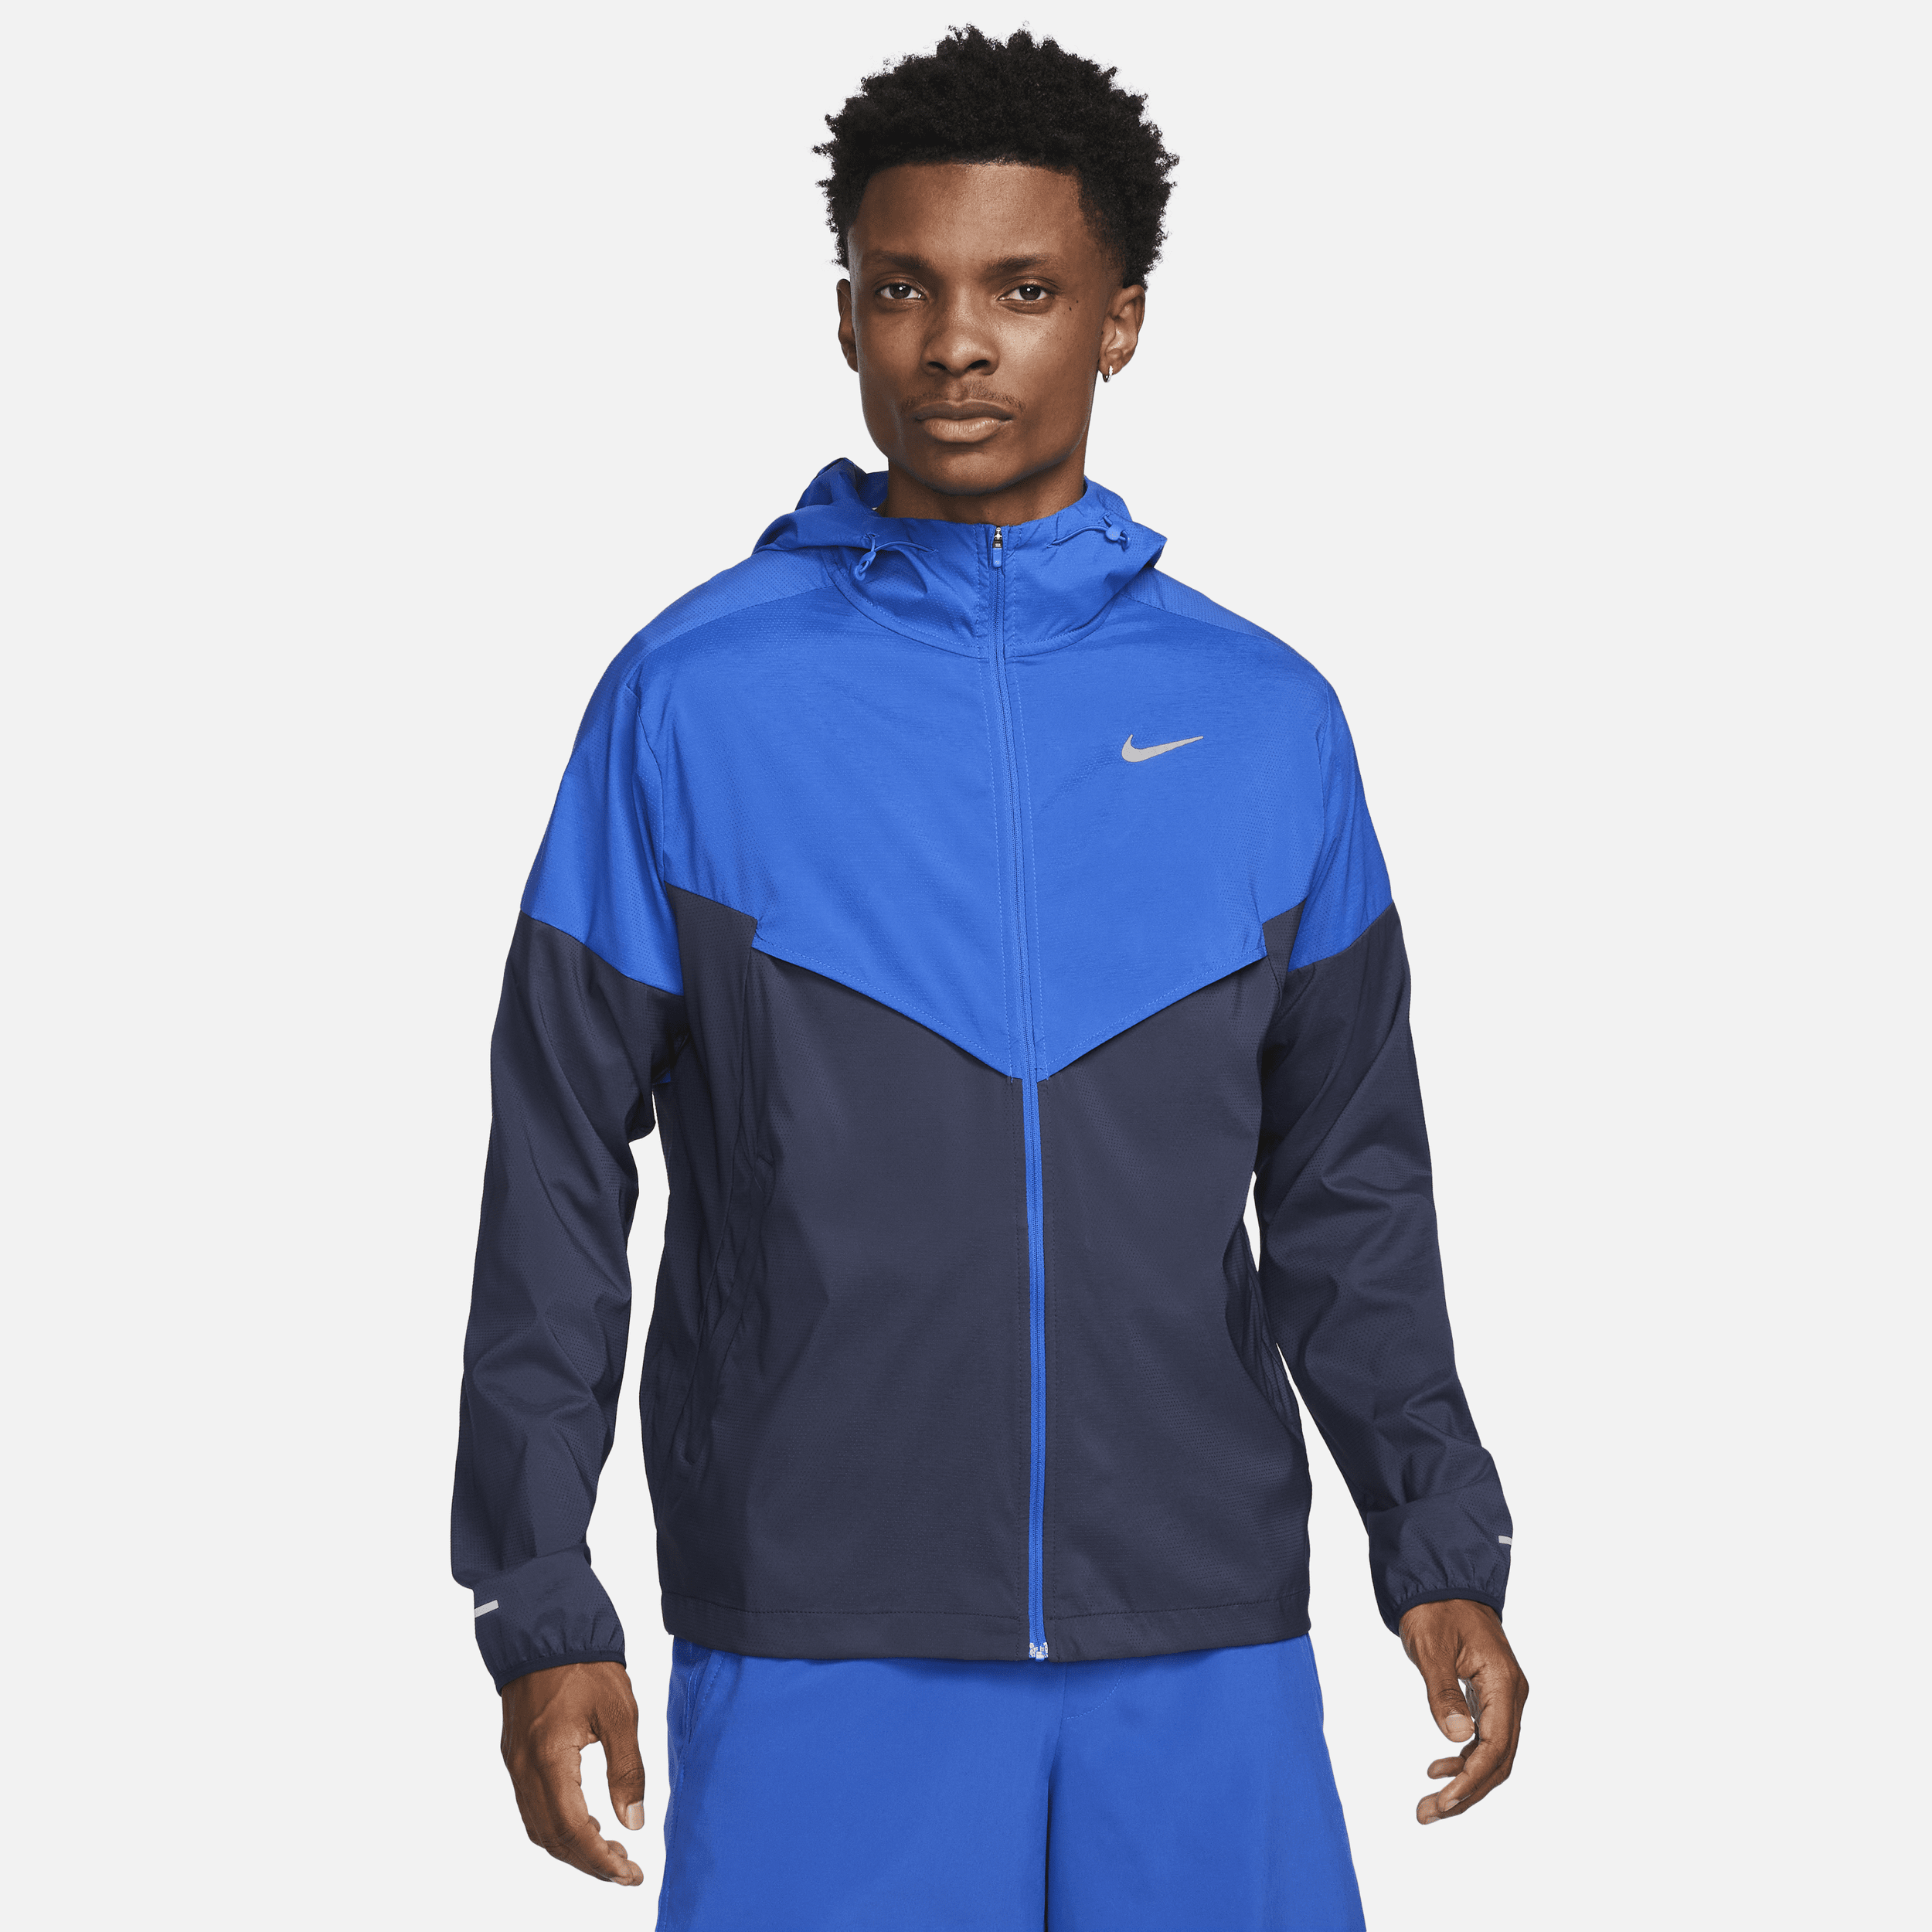 Giacca da running Repel Nike Windrunner – Uomo - Blu